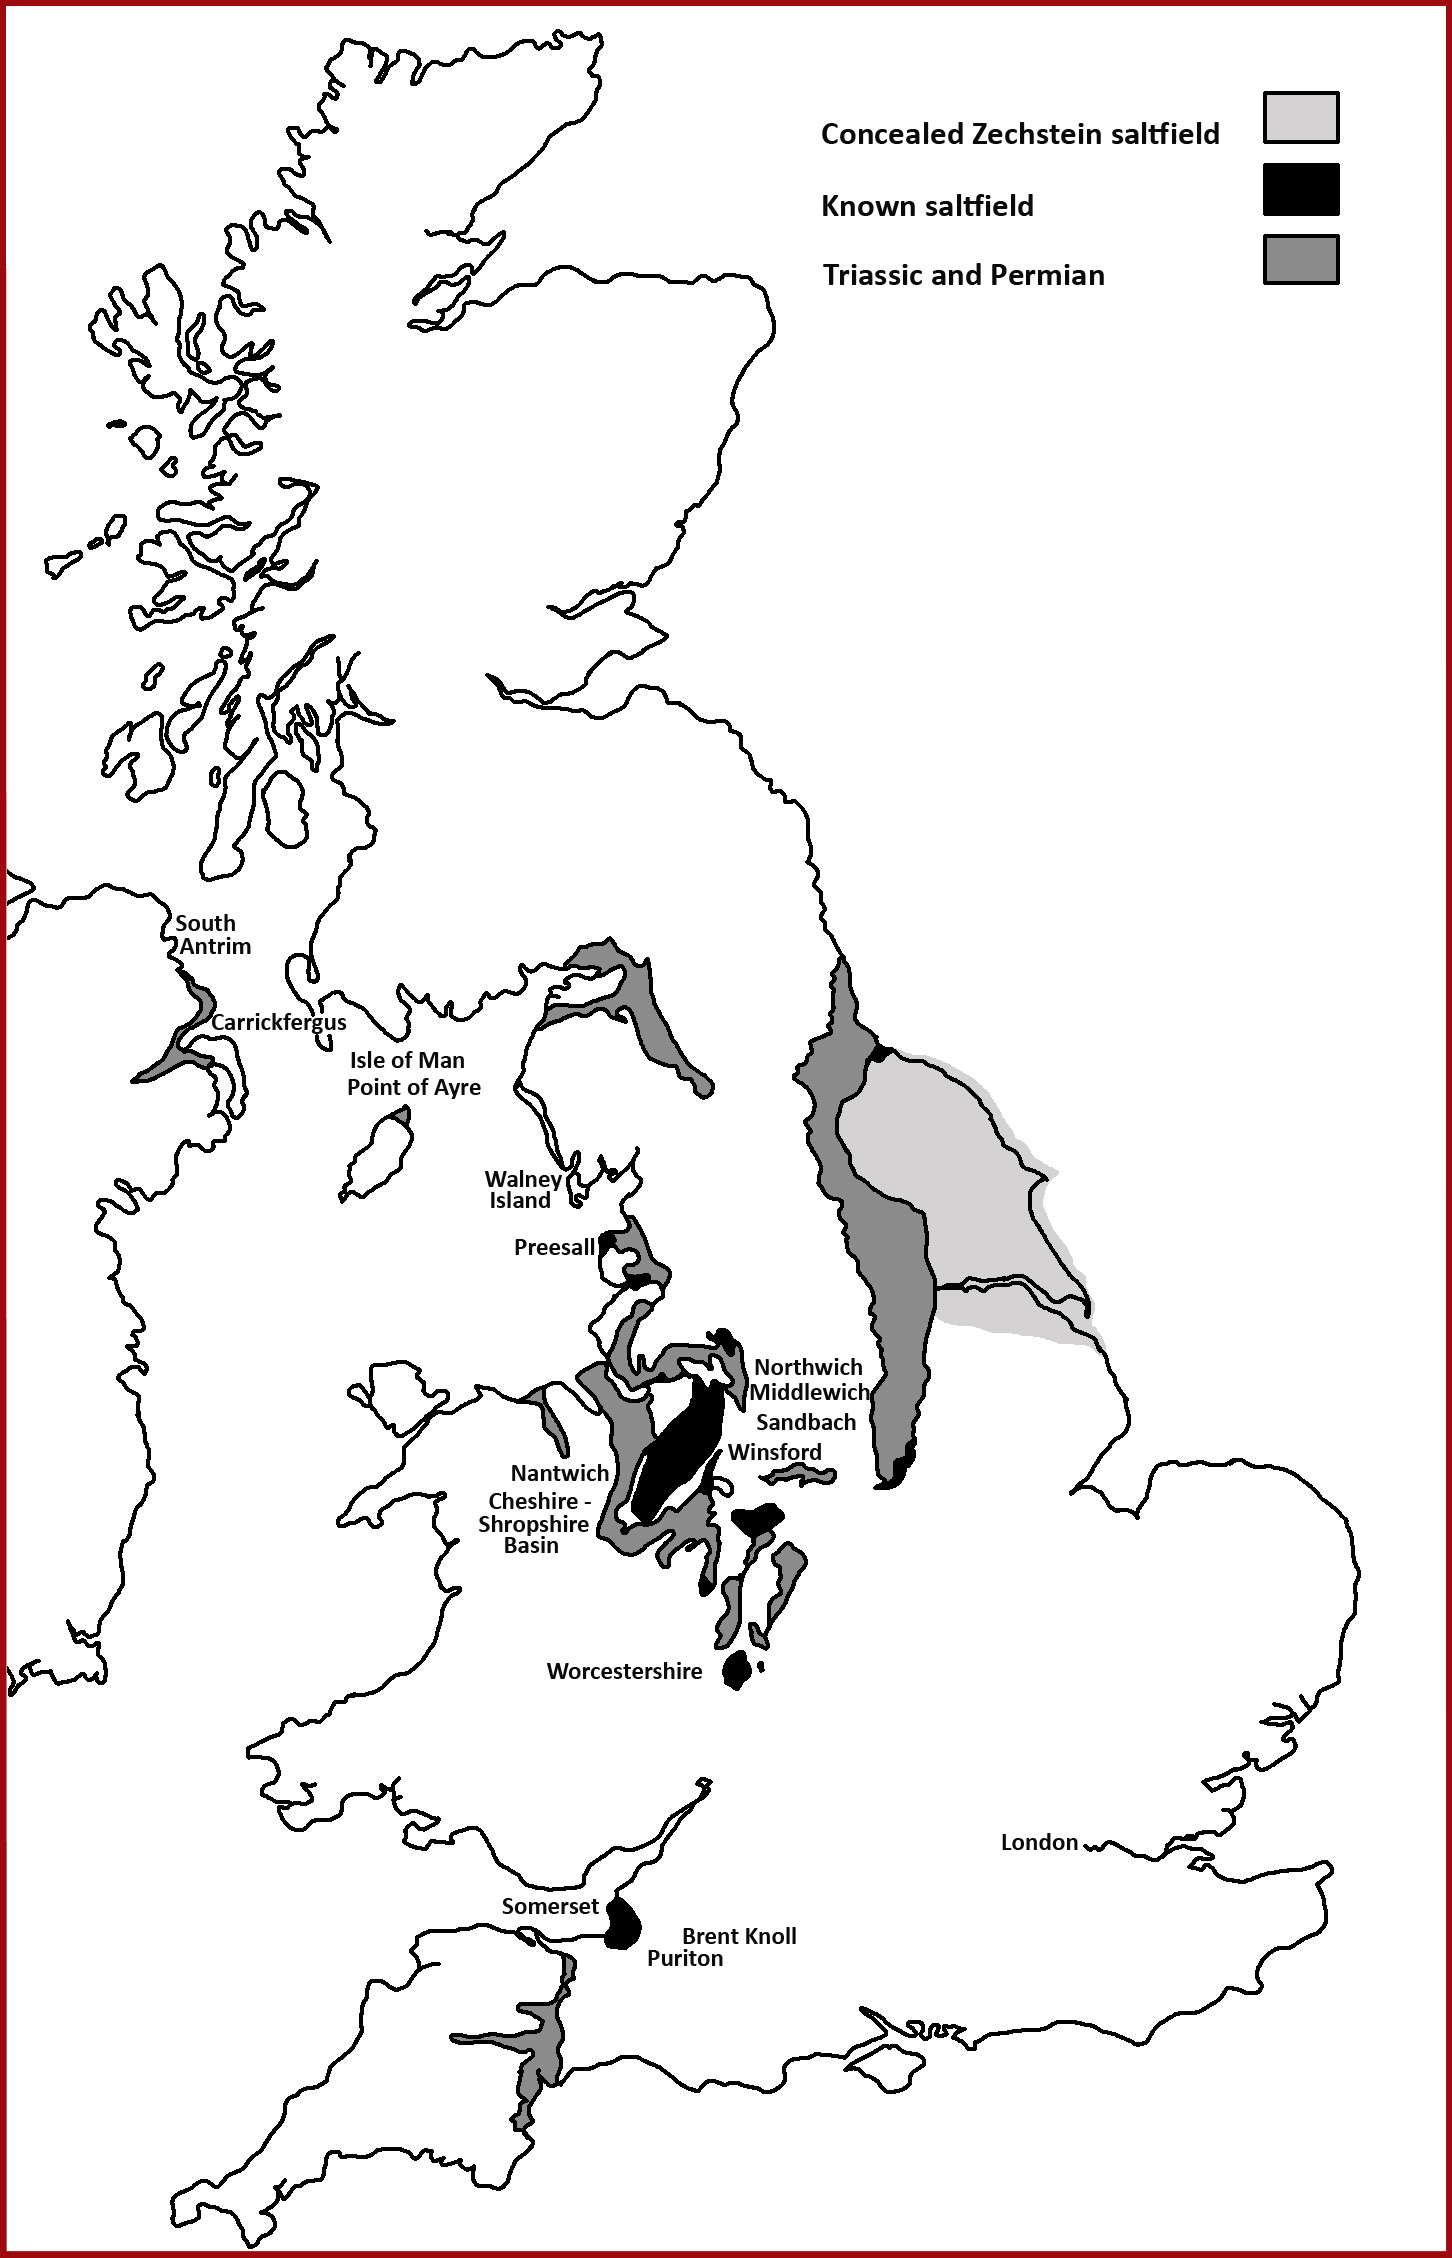 salt-deposits-uk-map-flat.jpg